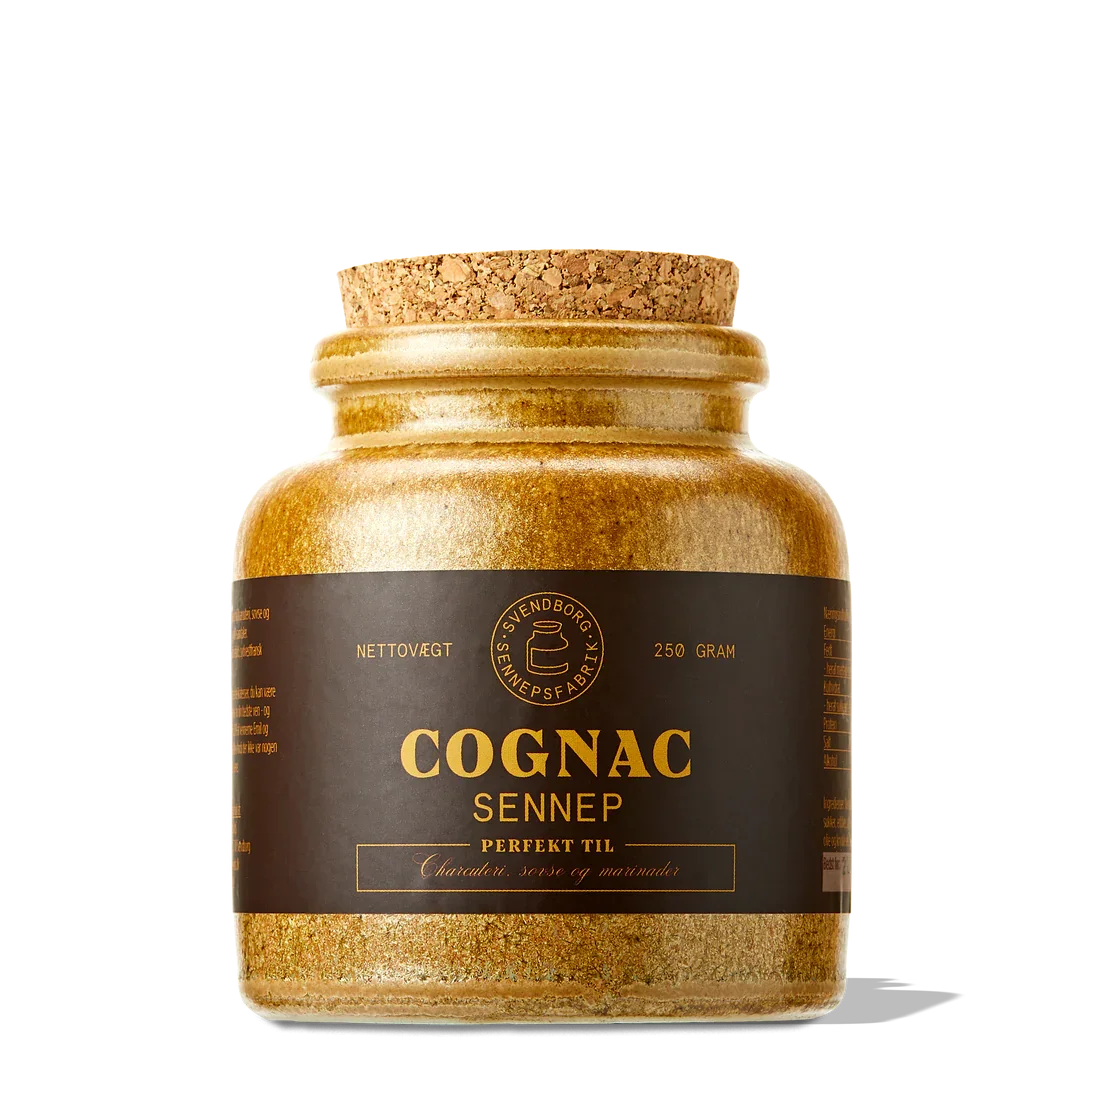 Cognac sennep 250 gram